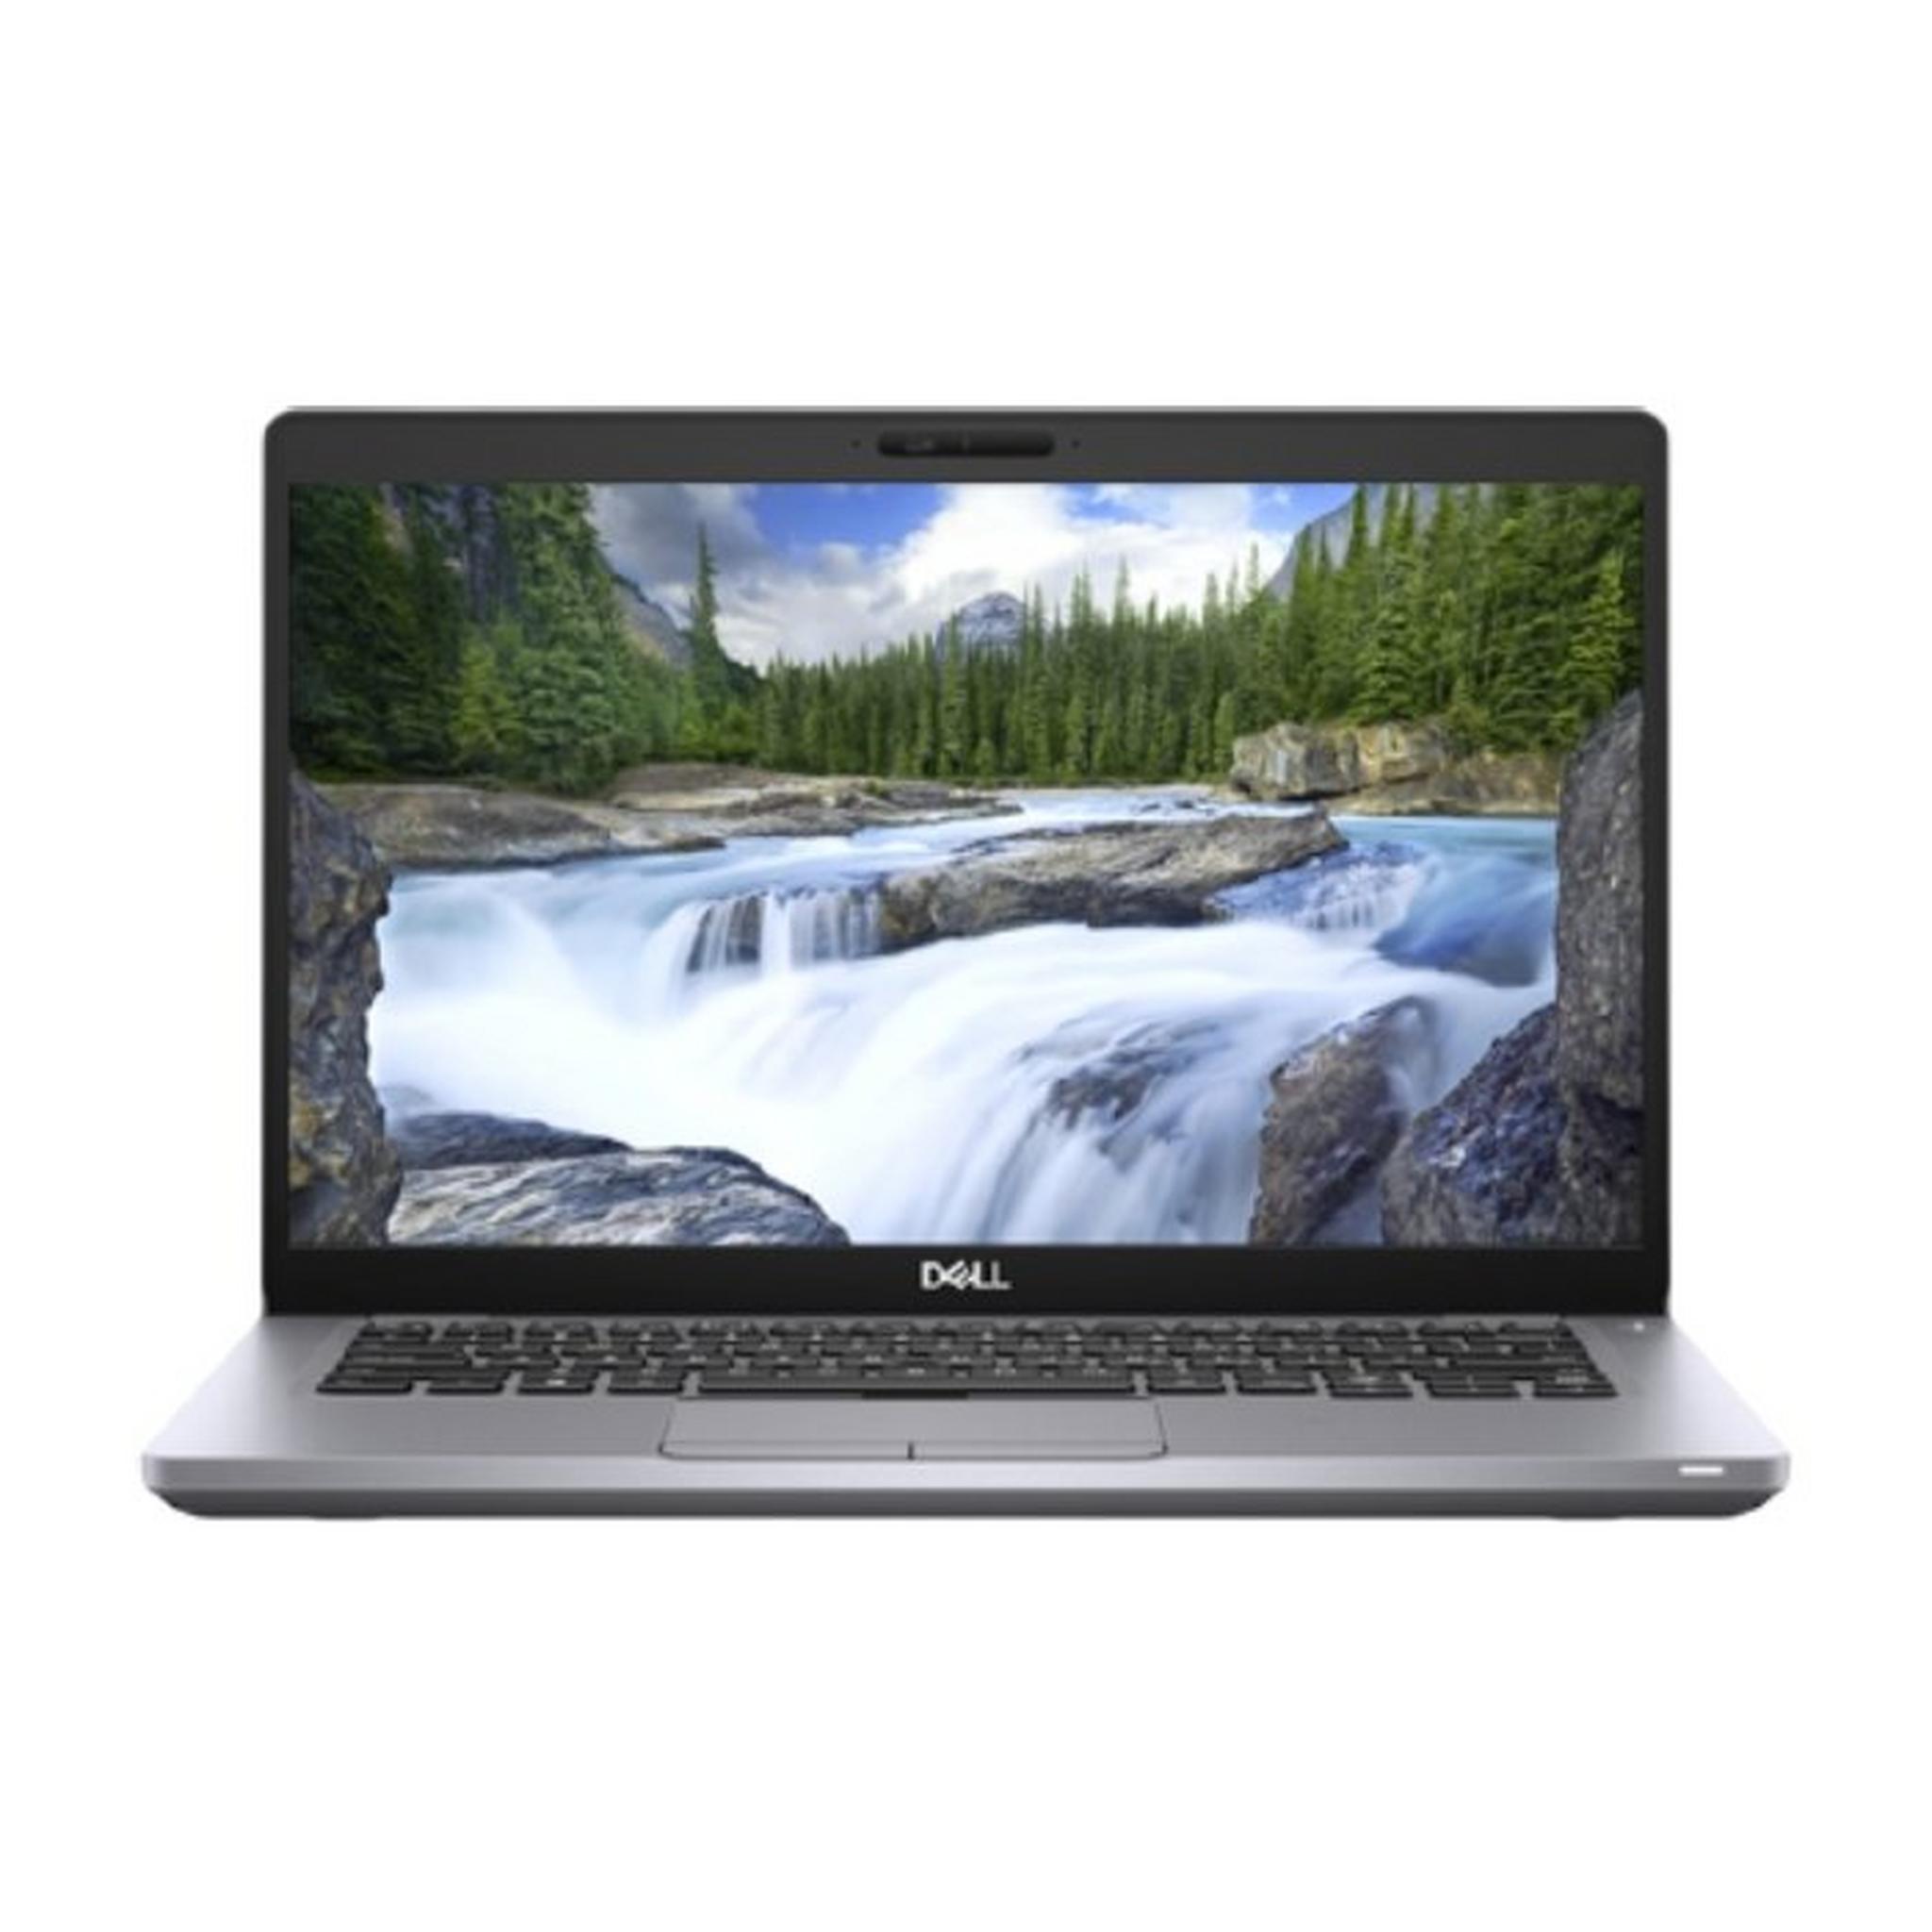 Dell intel core i7, 8GB RAM, 1 TB HDD, Intel UHD Graphics - 14-inch Laptop (L5410-7812DP)